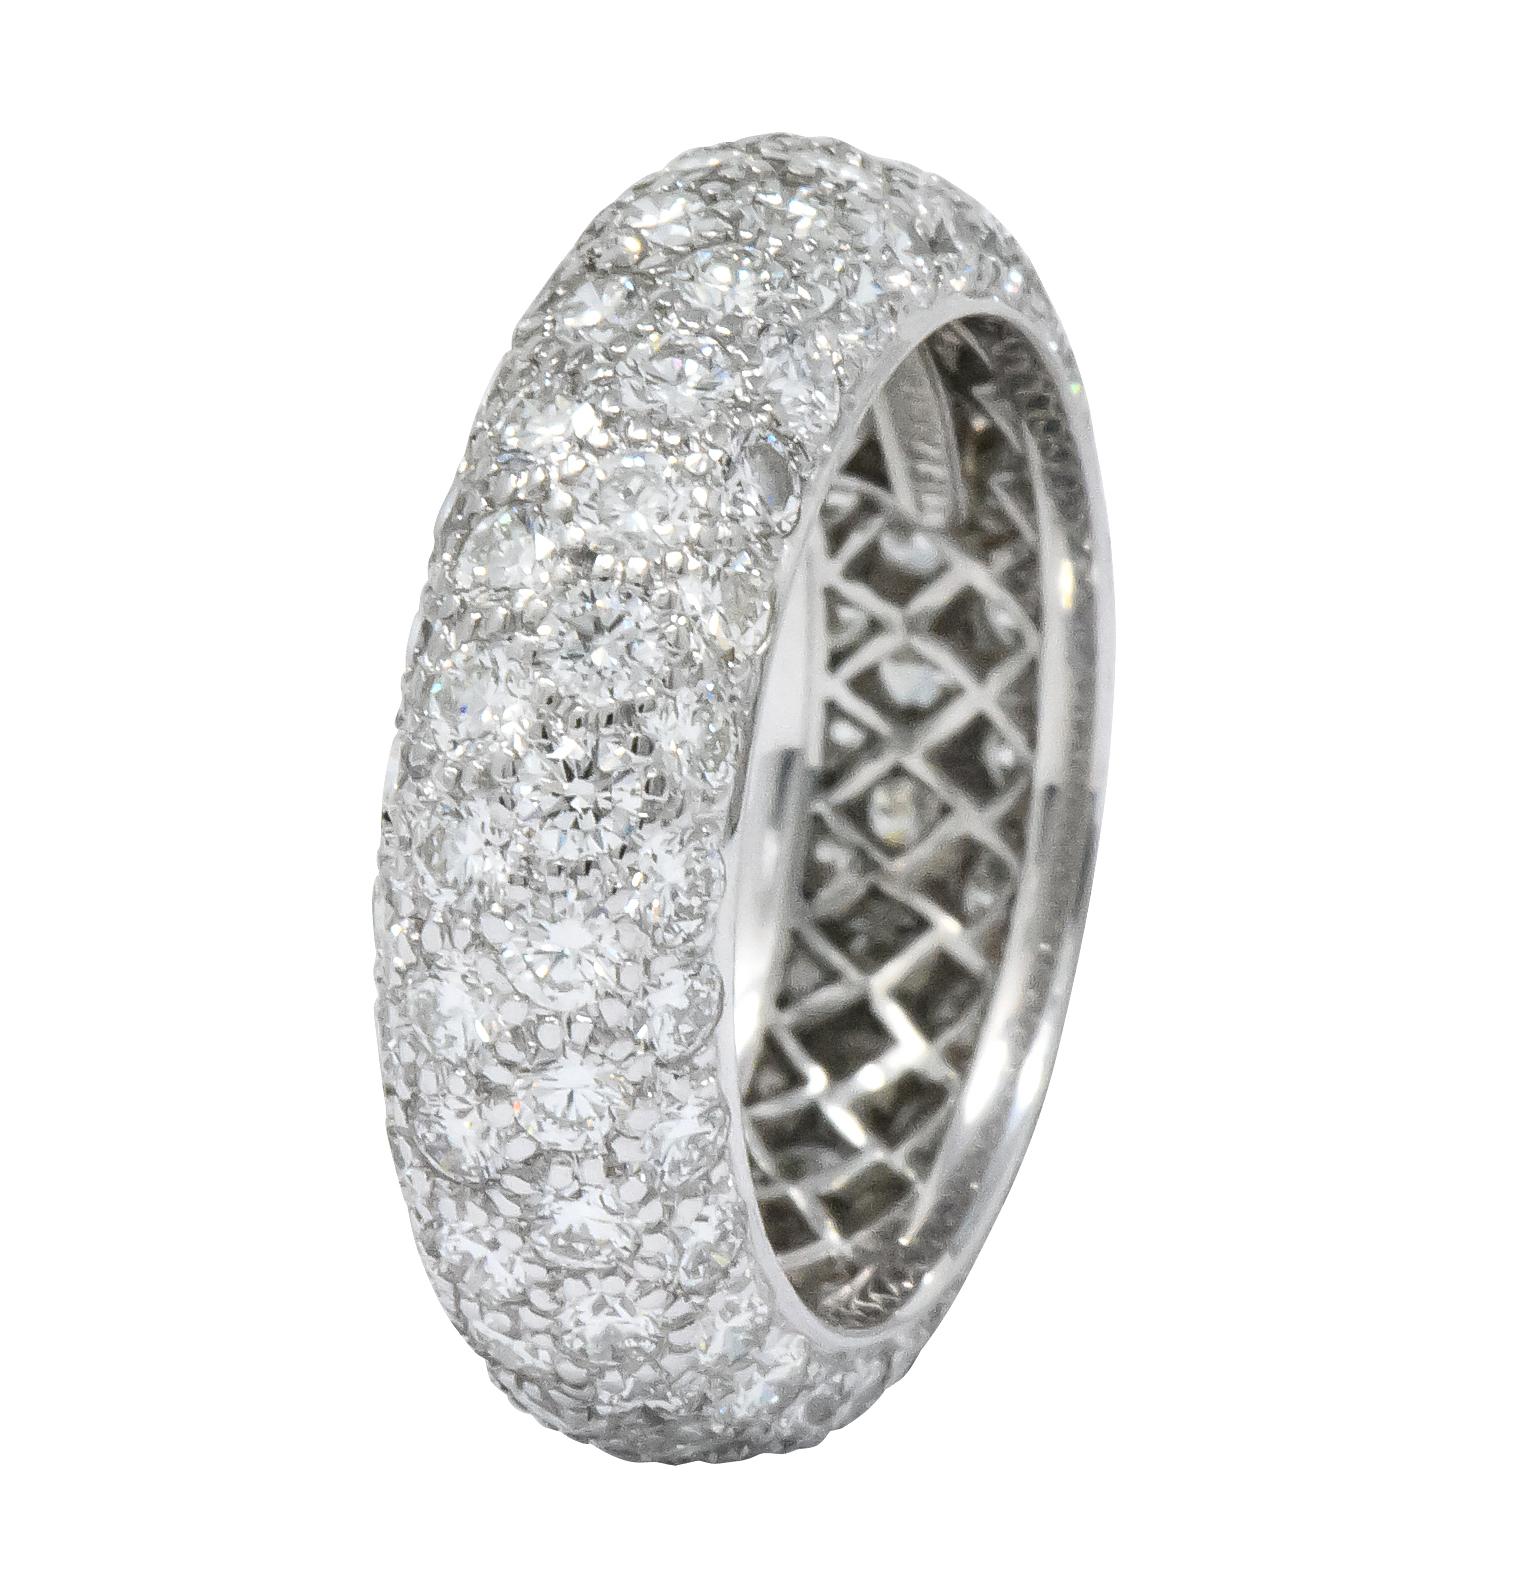 Tiffany & Co. 3.00 Carat Diamond Platinum Etoile 4-Row Eternity Band Ring 1